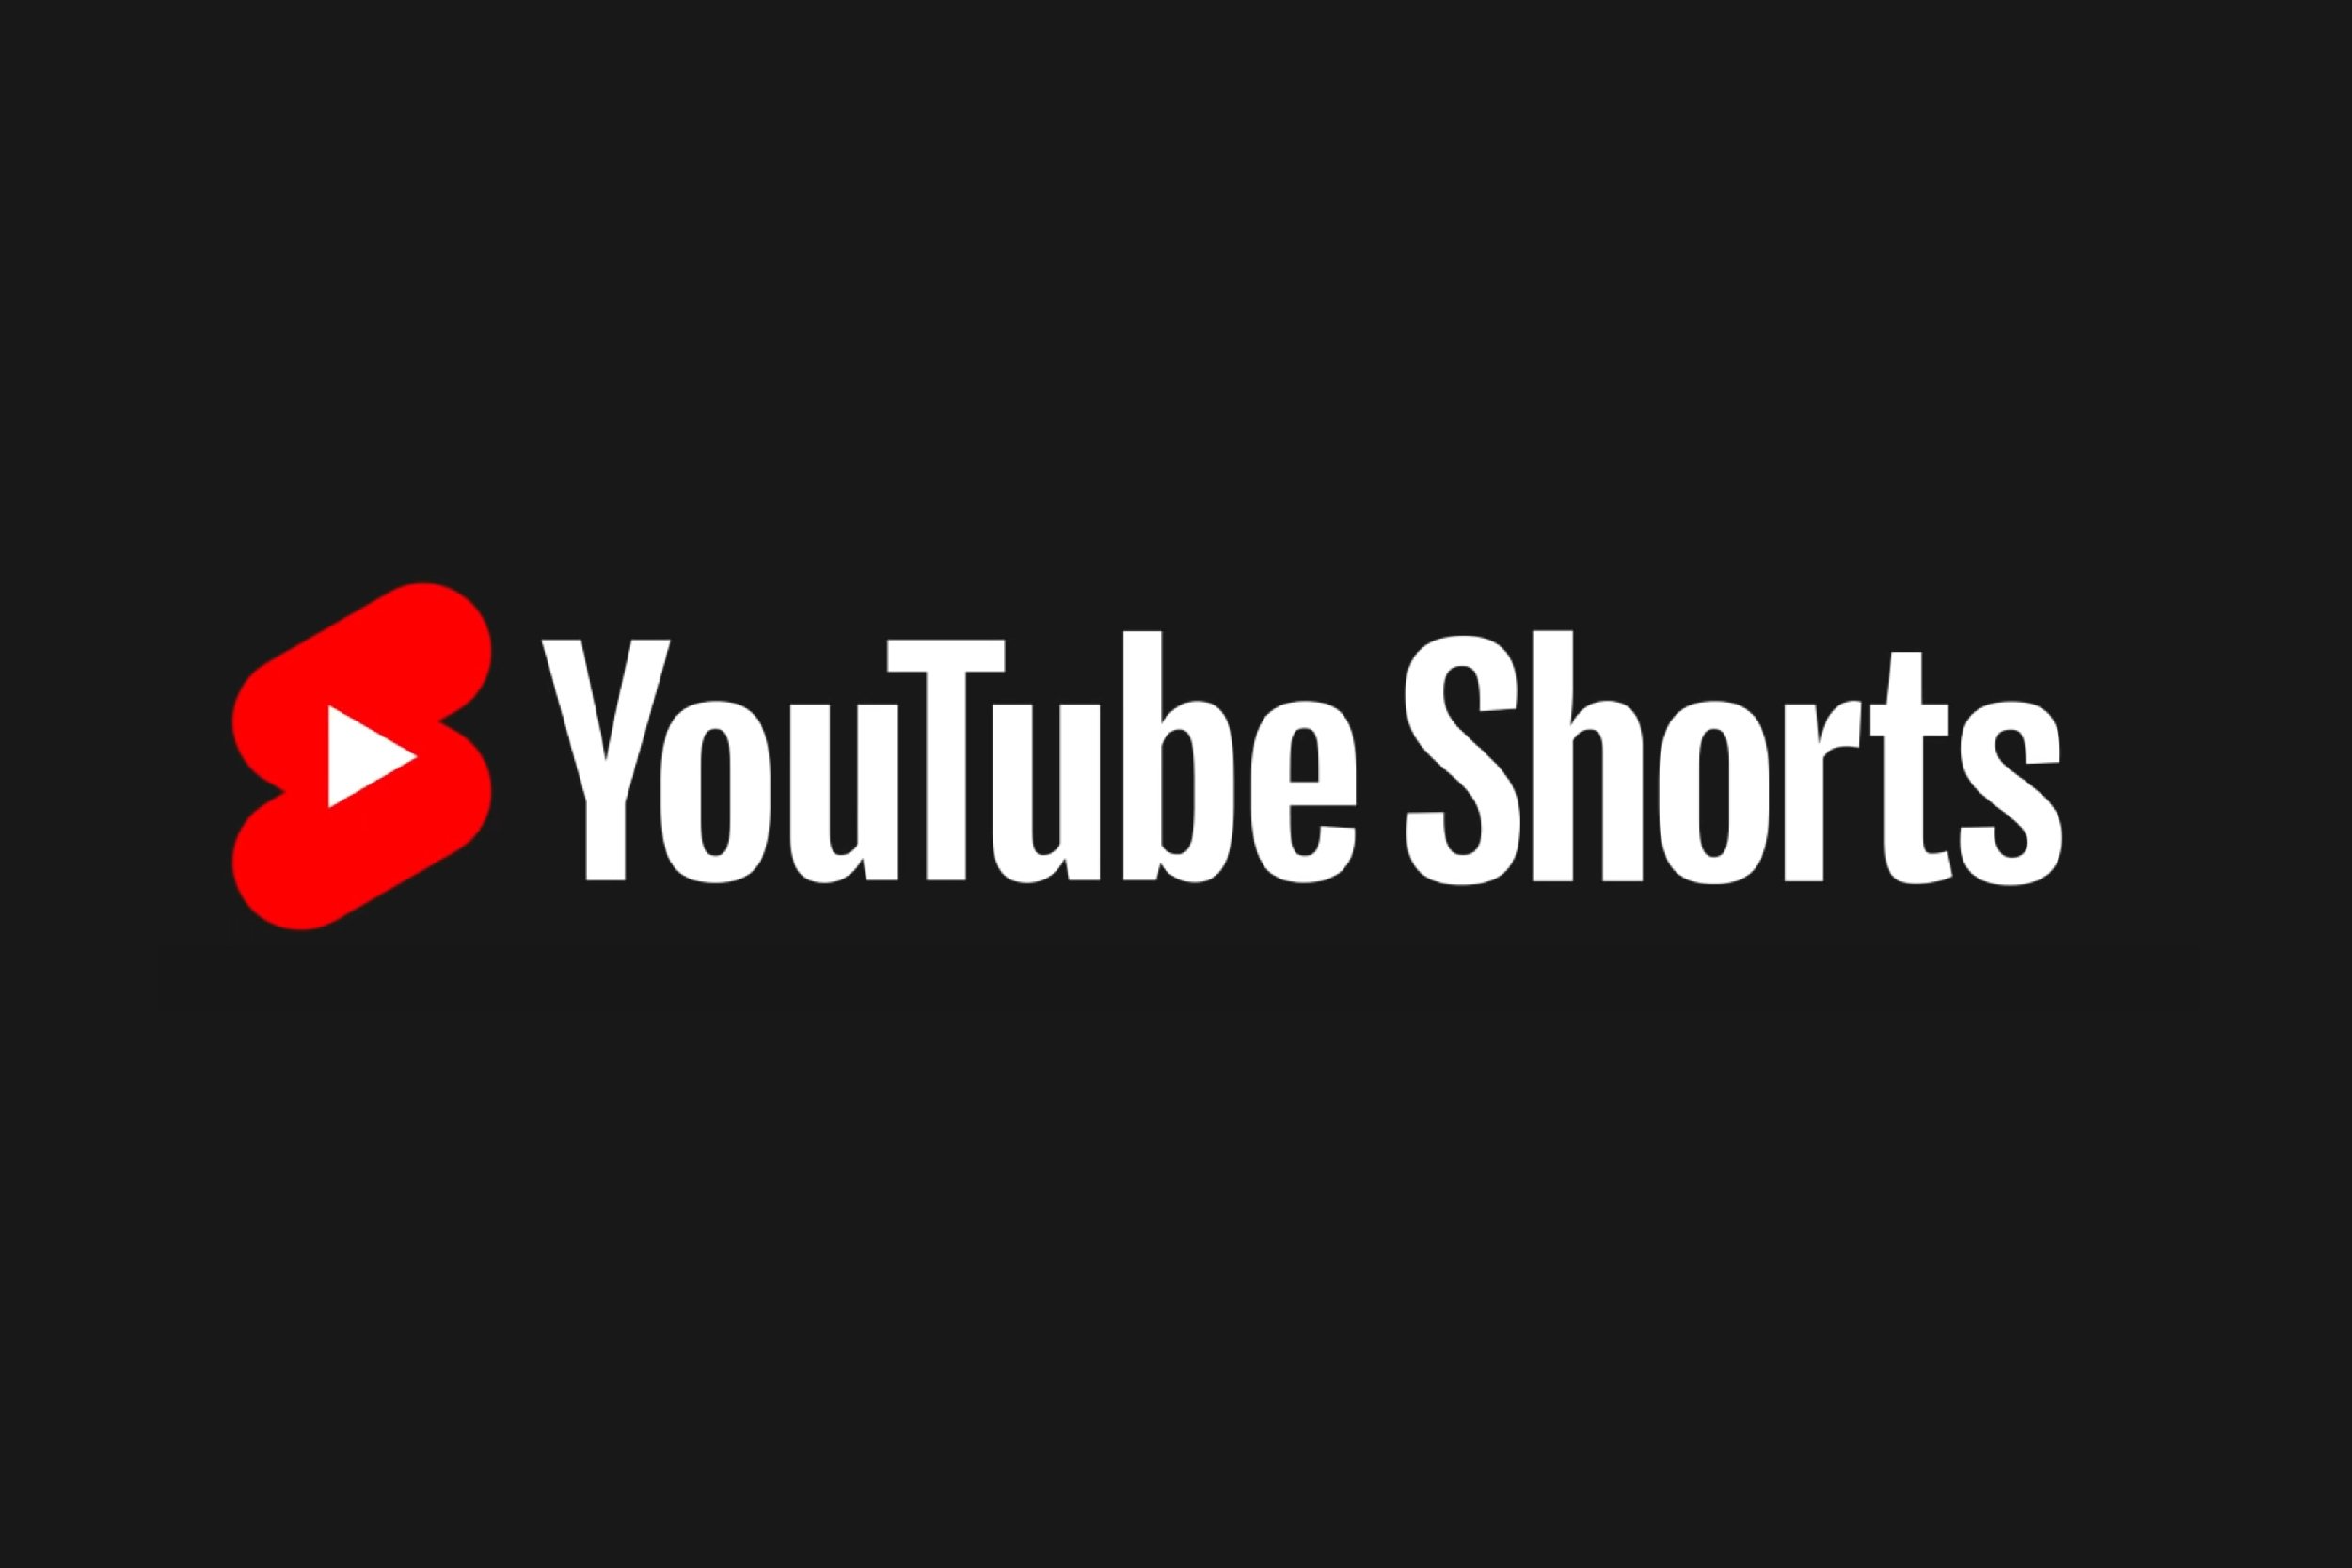 Youtube shorts 1. Ютуб Шортс. Логотип ютуб Шортс. Шортс видео. Shorts youtube видео.